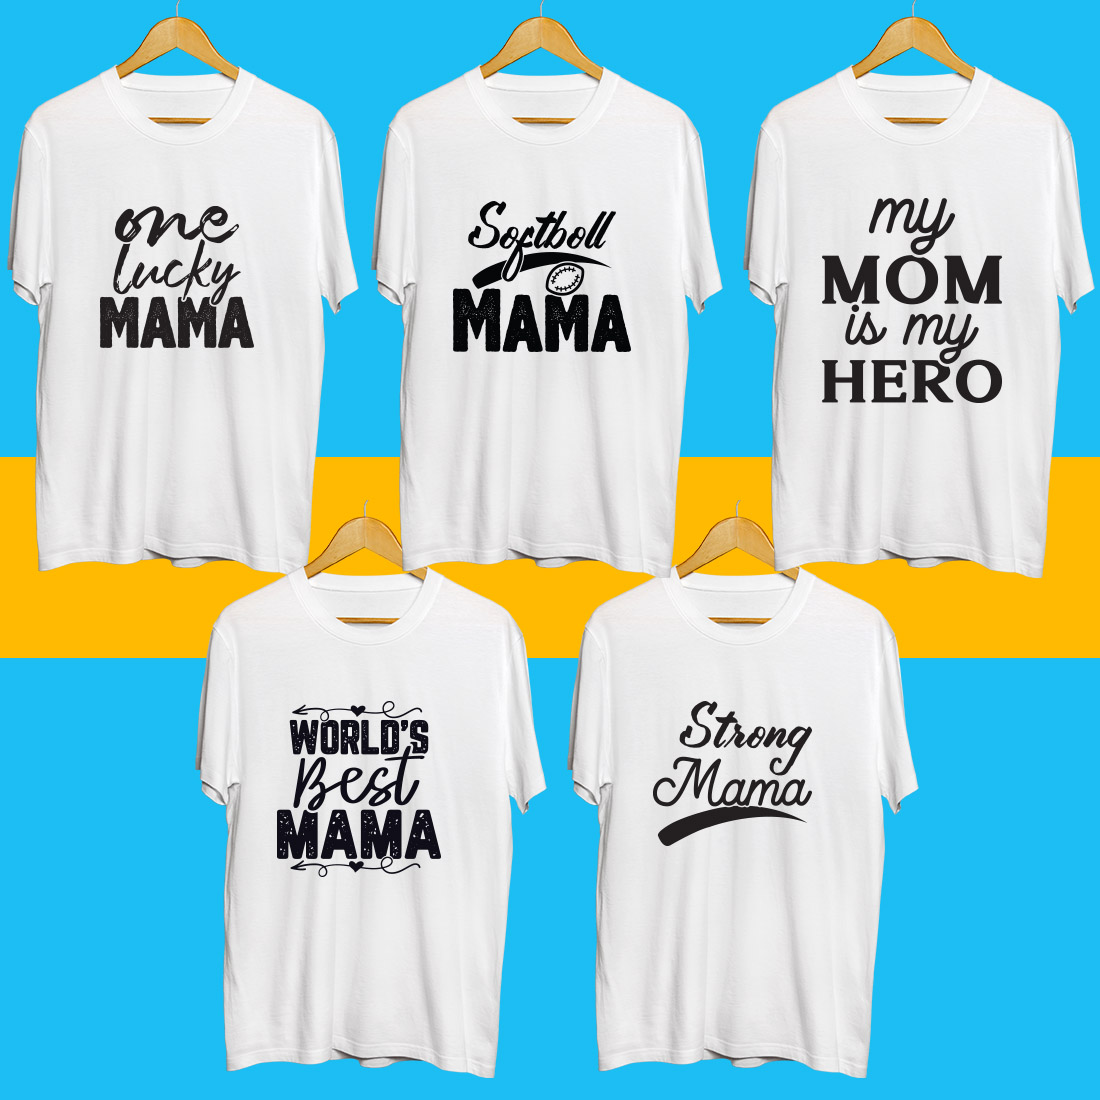 Mama T Shirt Designs Bundle preview image.